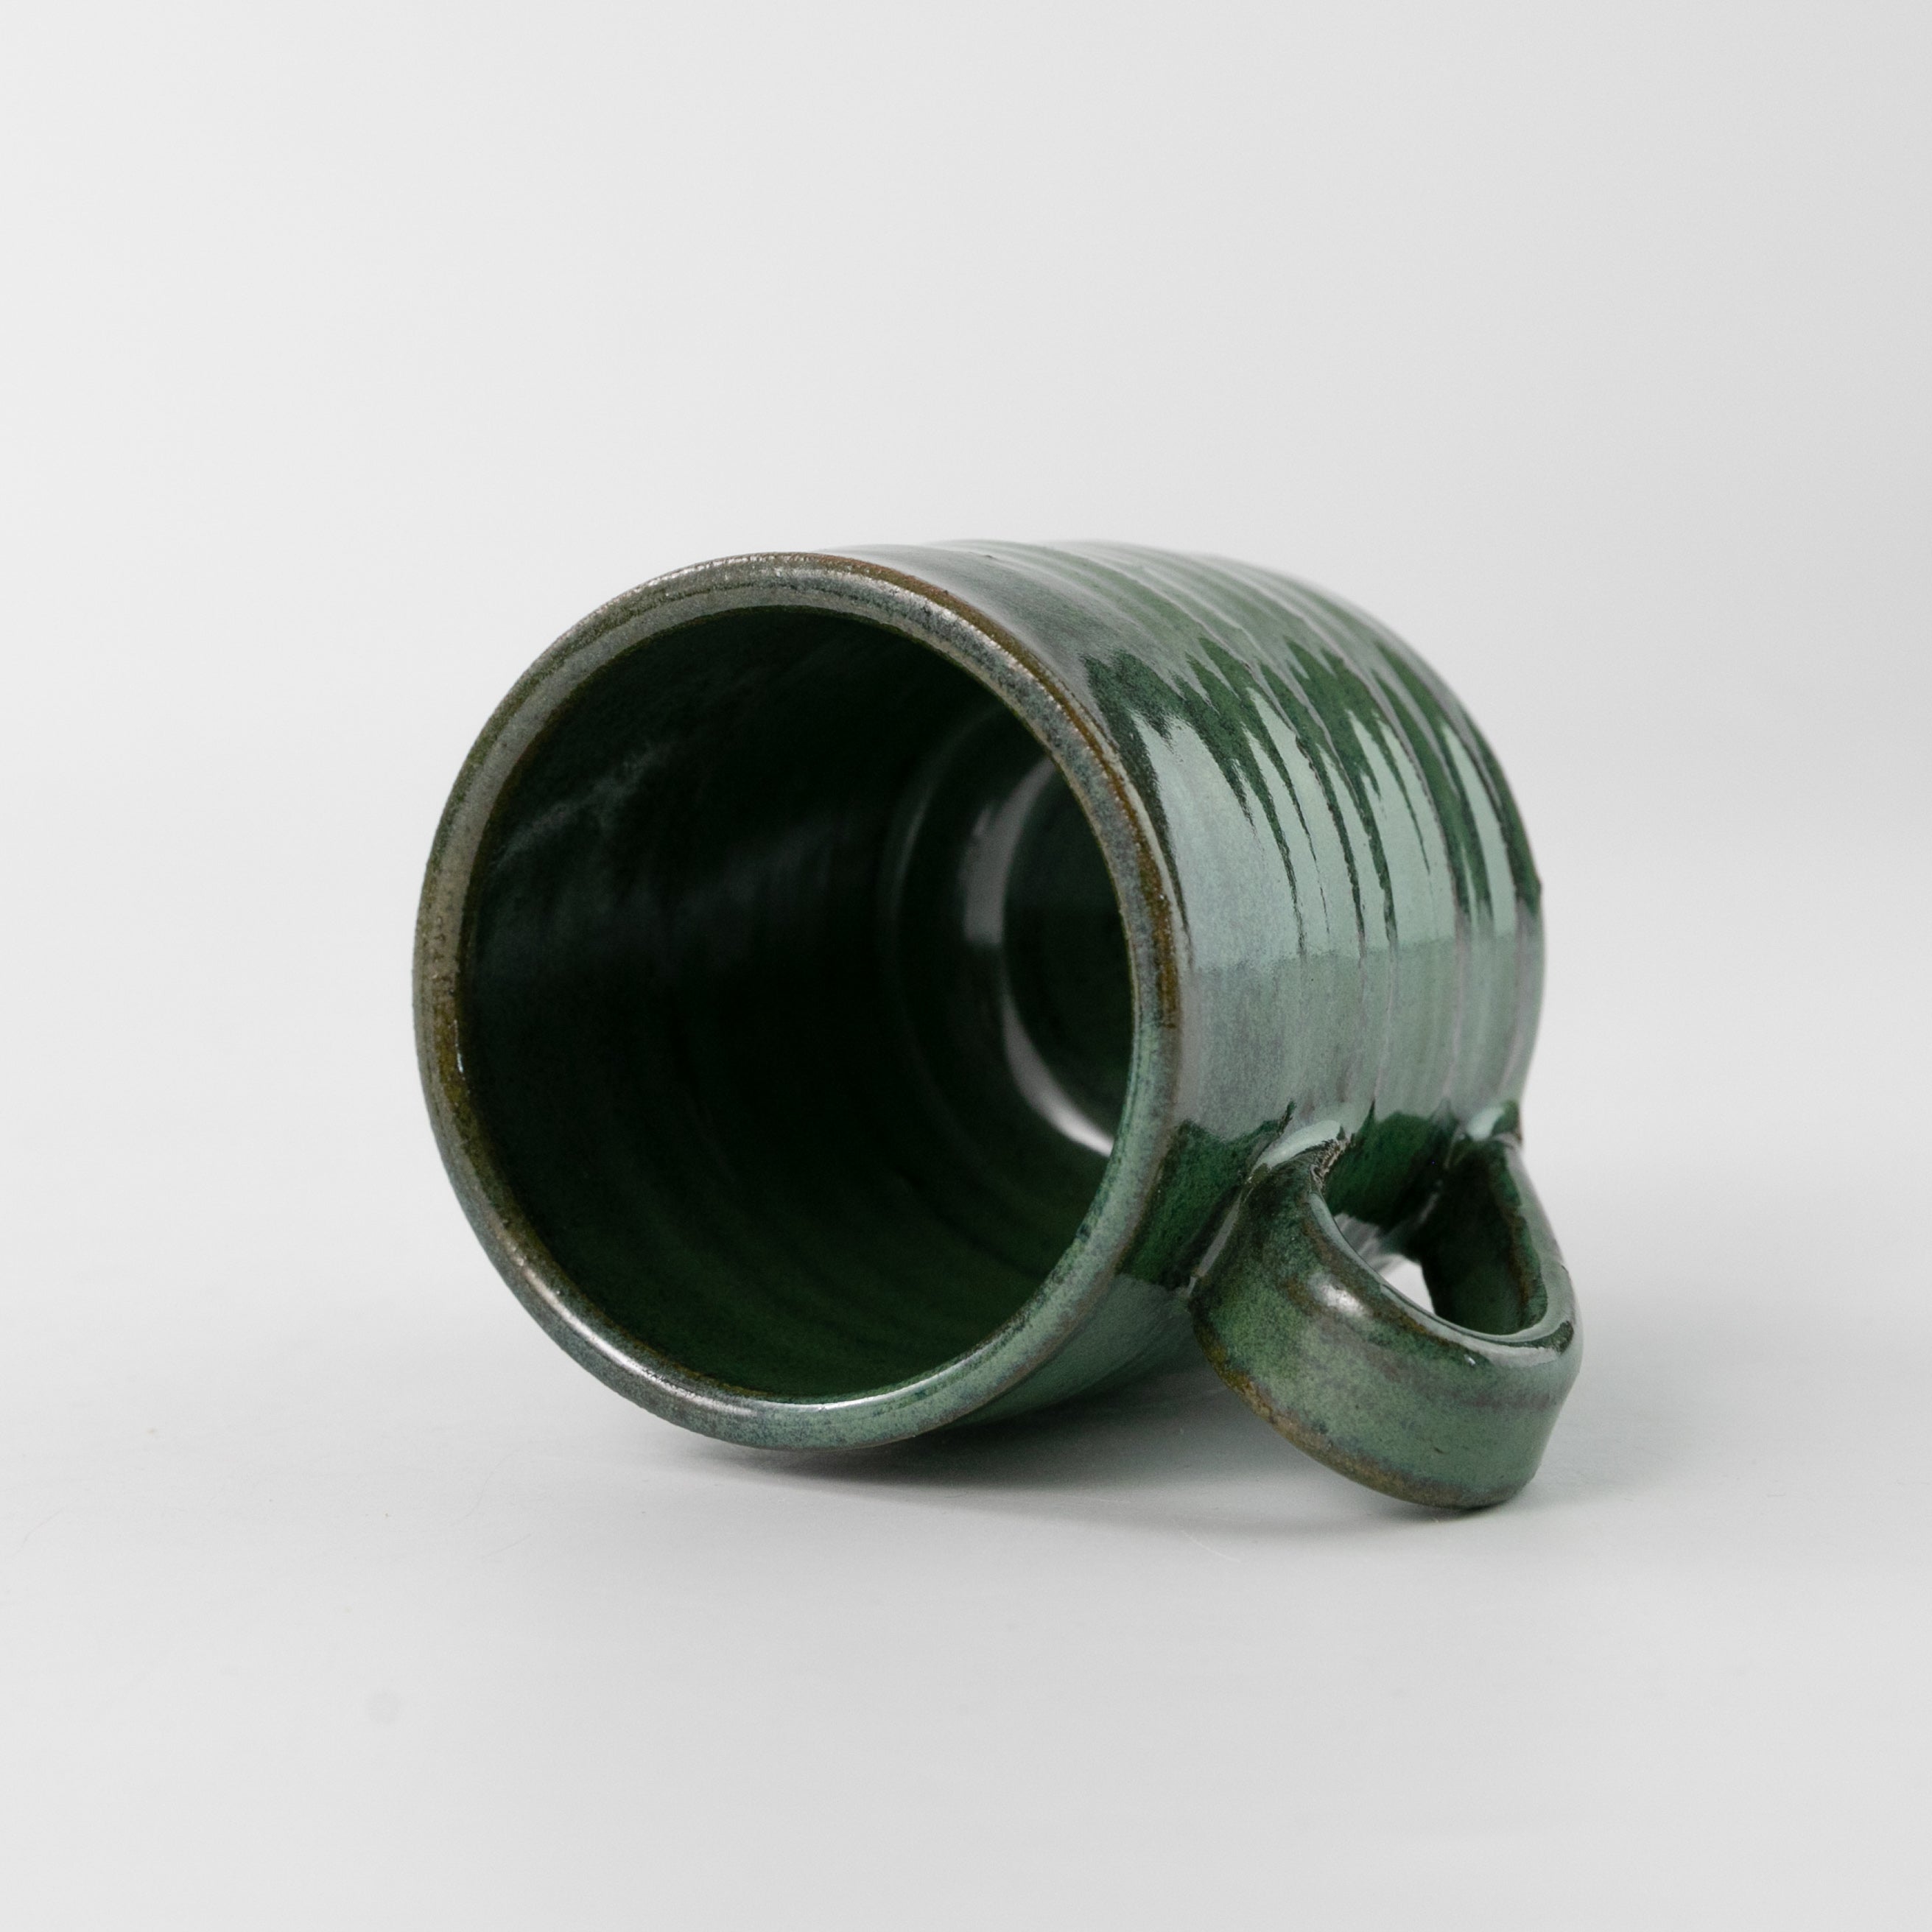 Glazed Green Mug